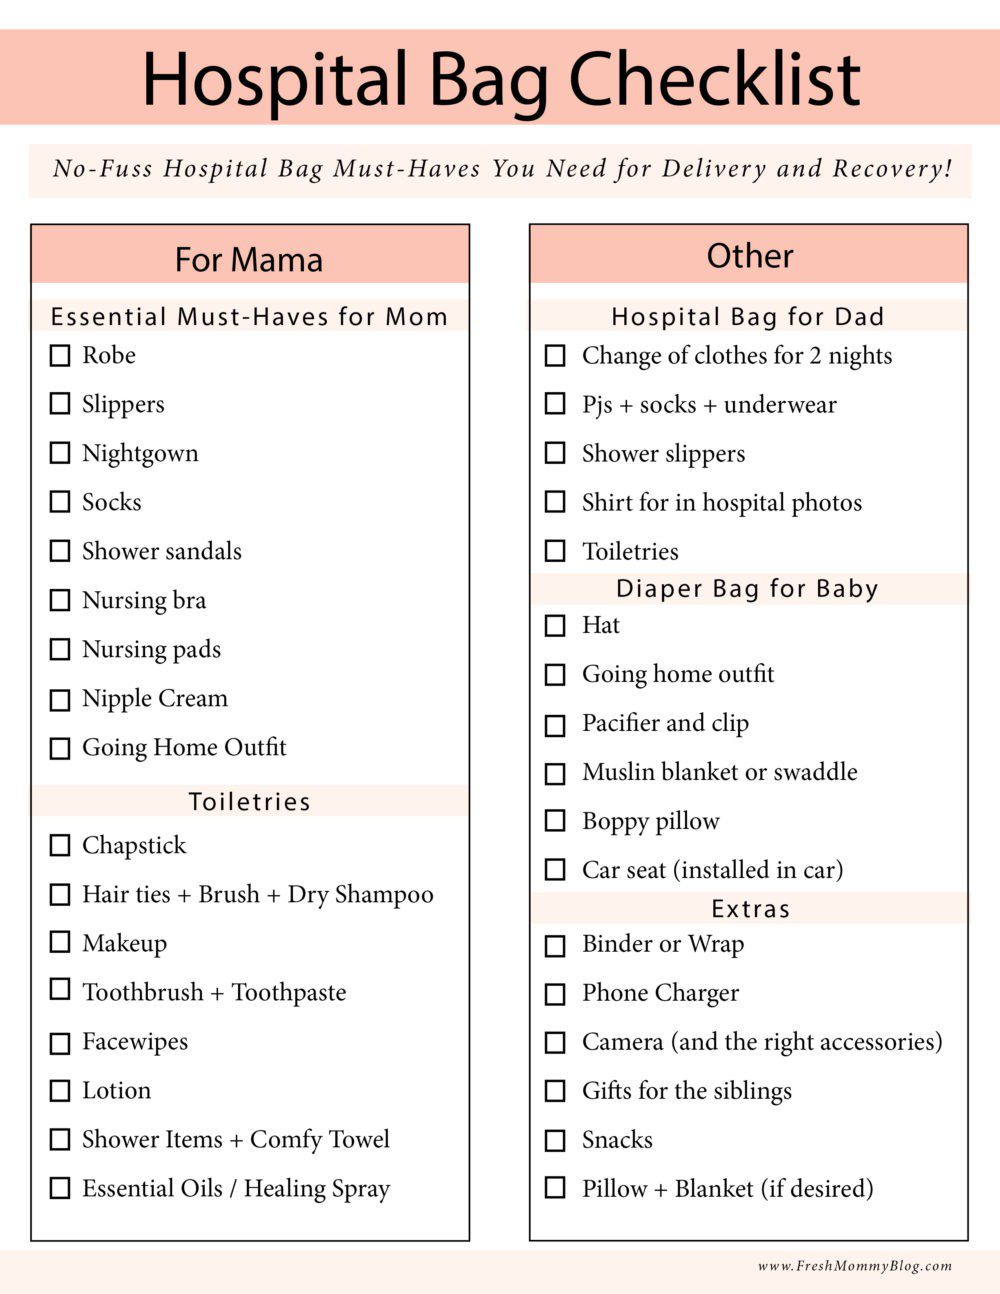 https://freshmommyblog.com/wp-content/uploads/2019/09/Hospital-Bag-Checklist-e1568121250794.jpg